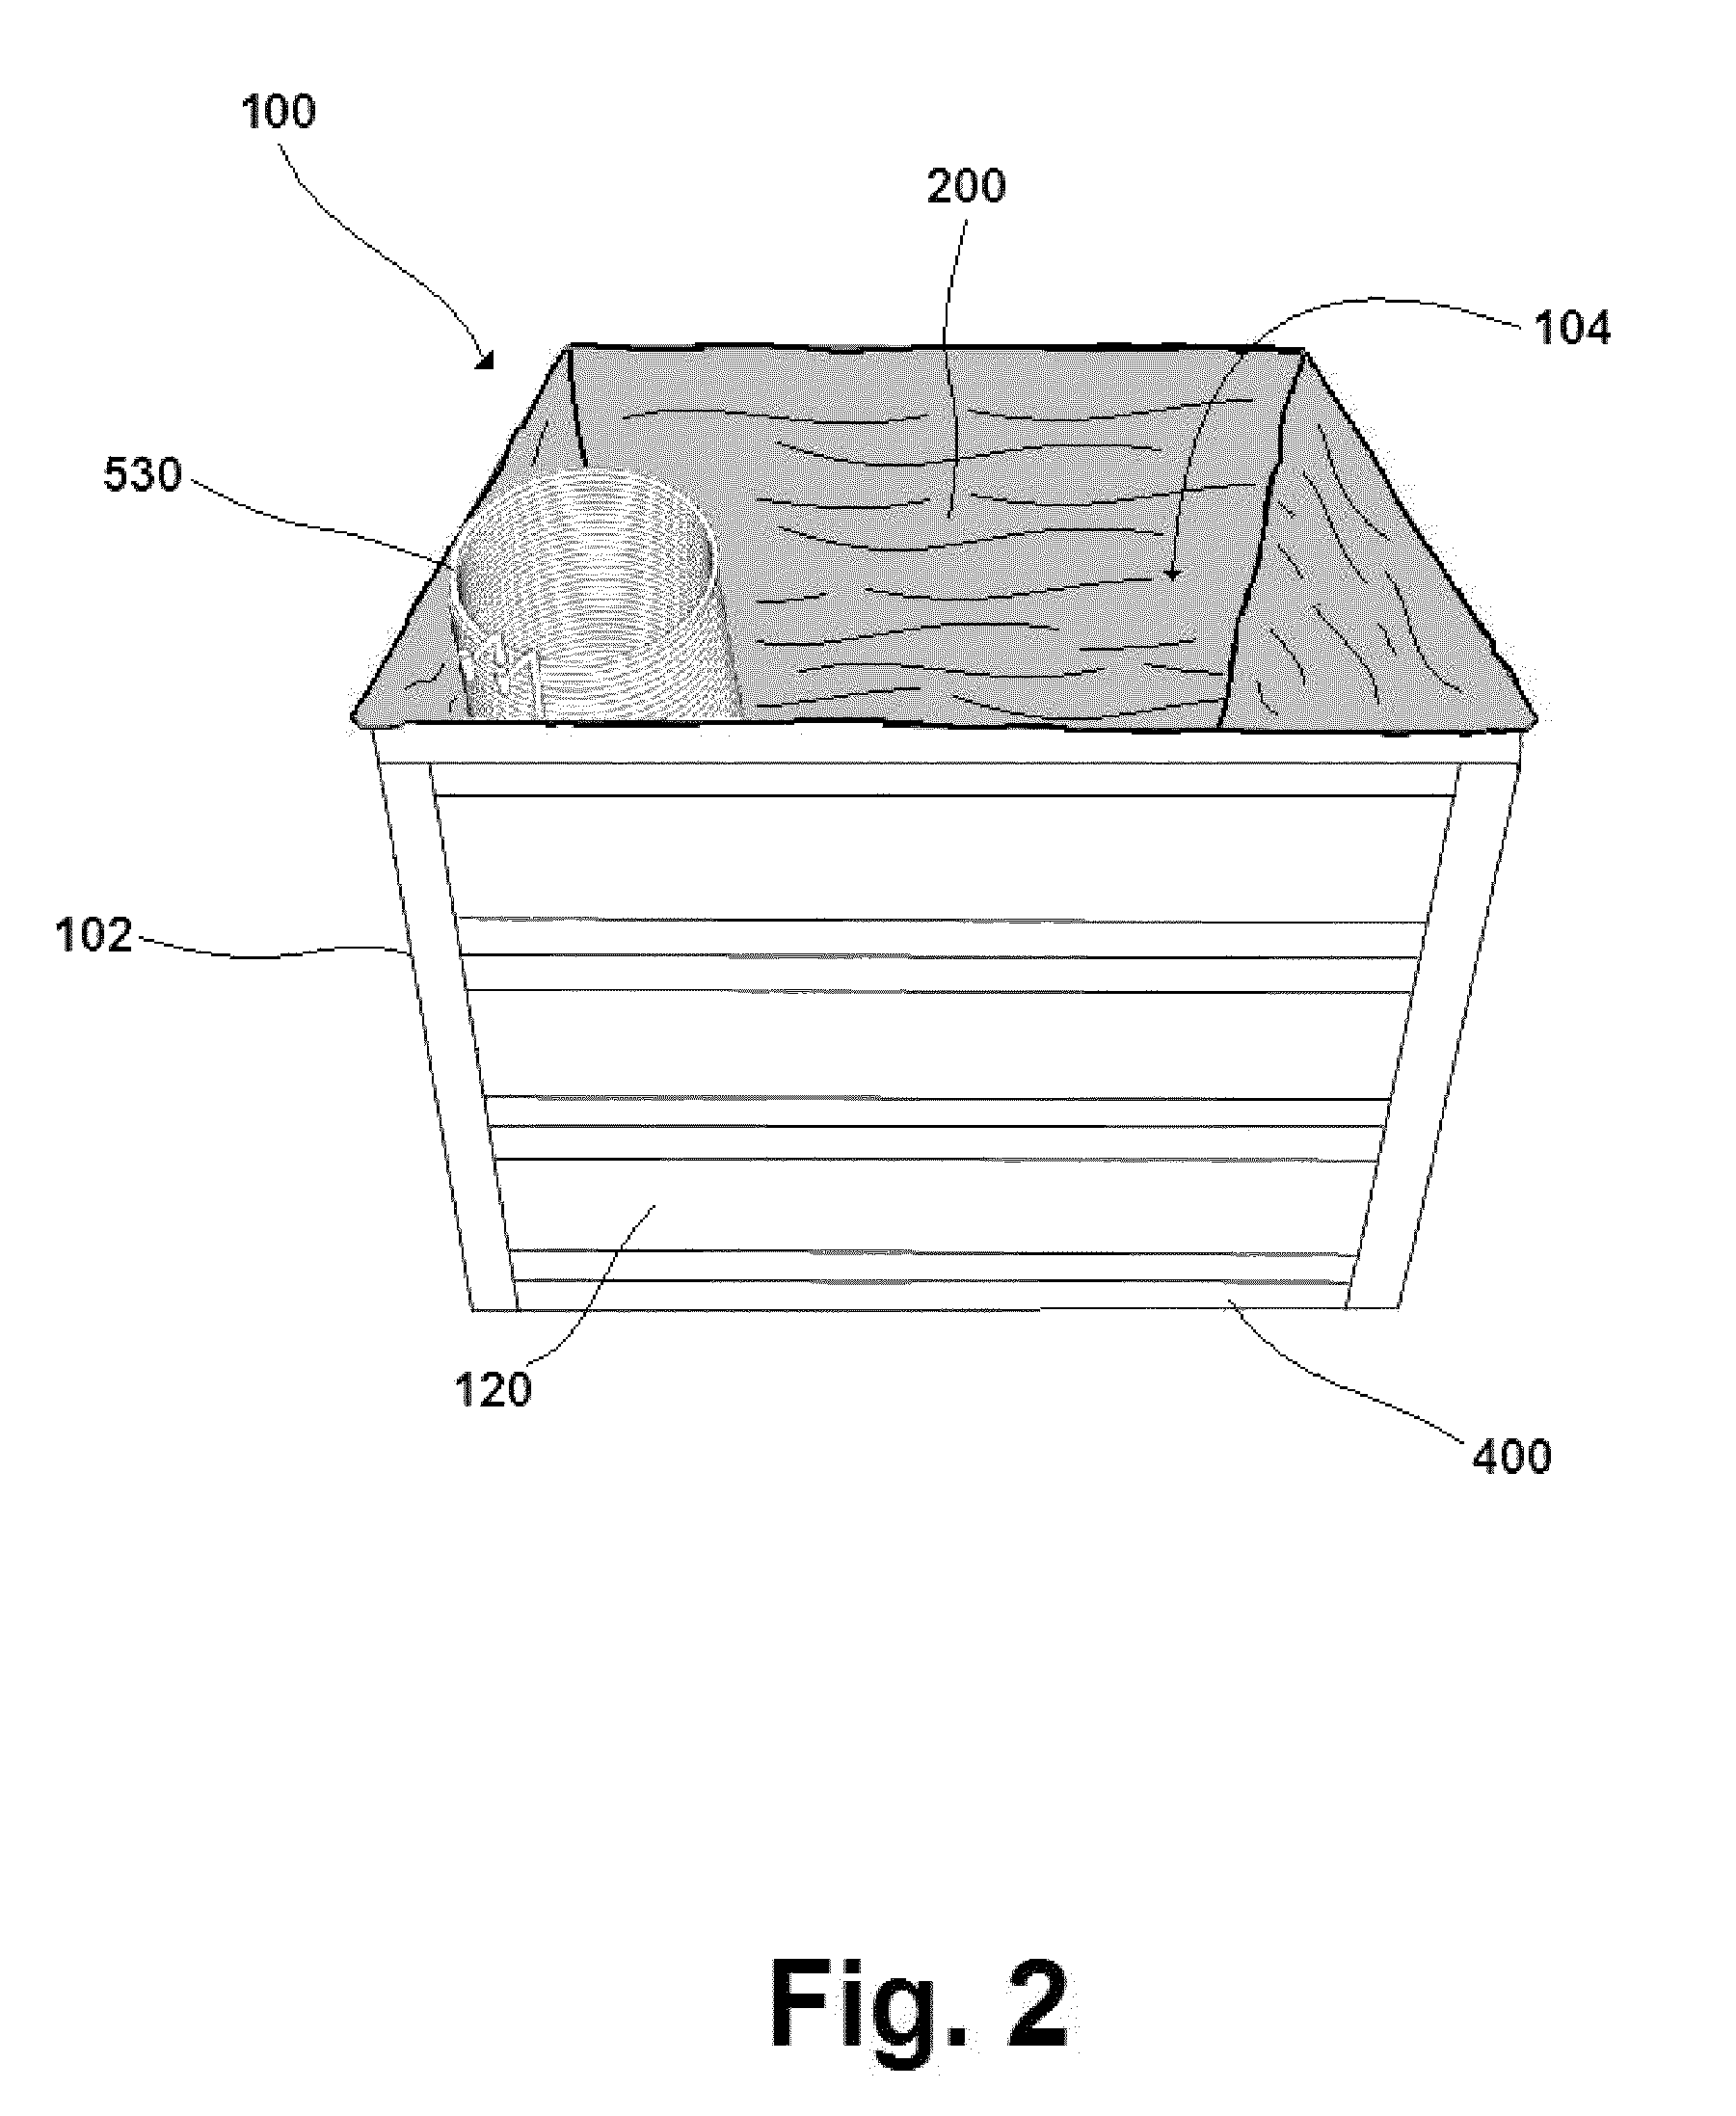 Modular insulated water tank